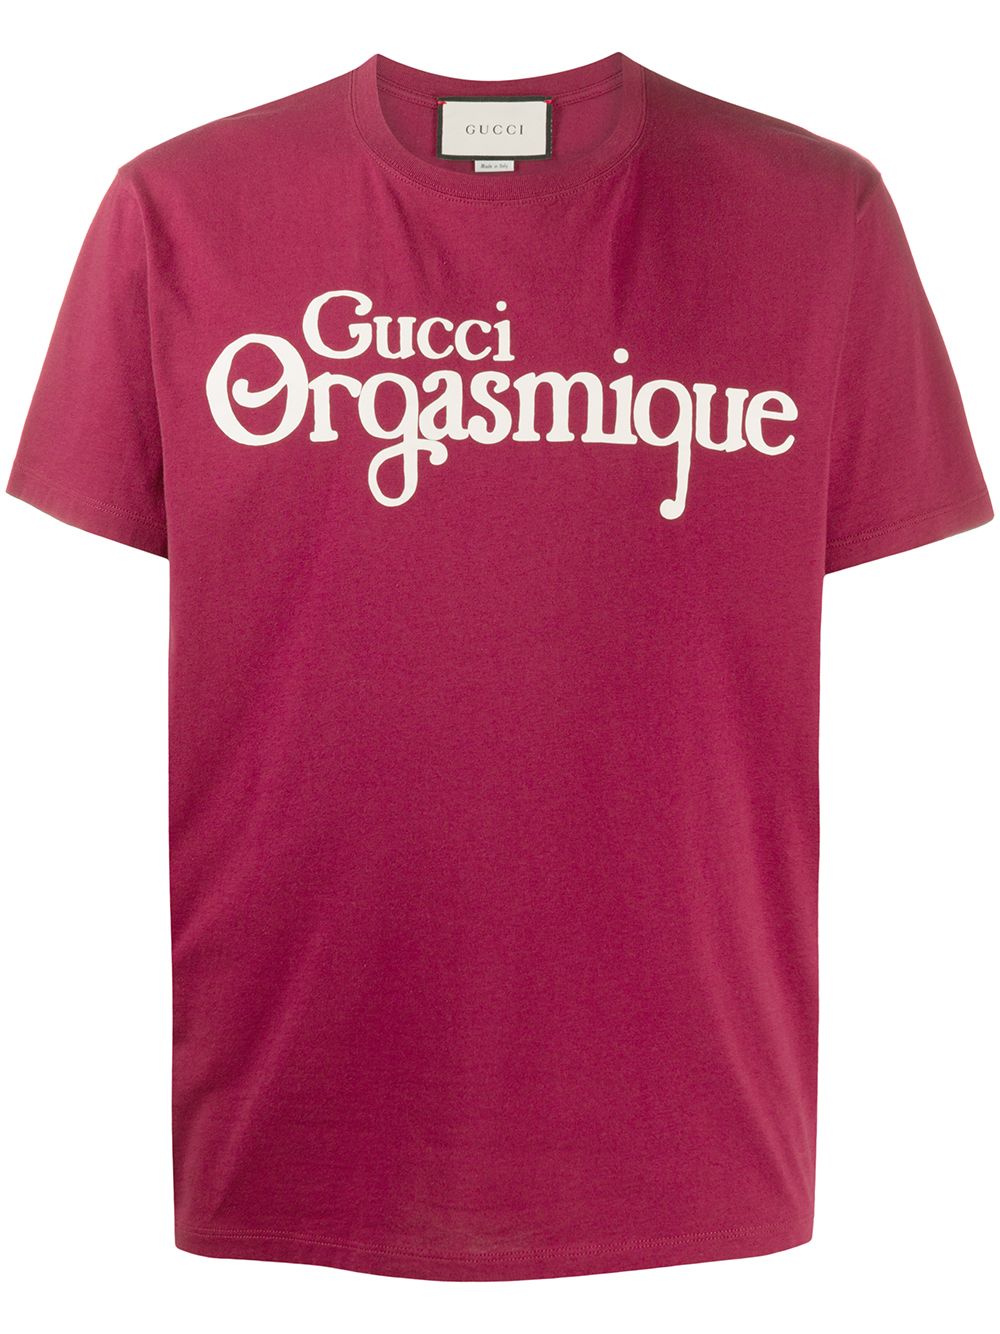 Gucci Orgasmique T-shirt In Purple